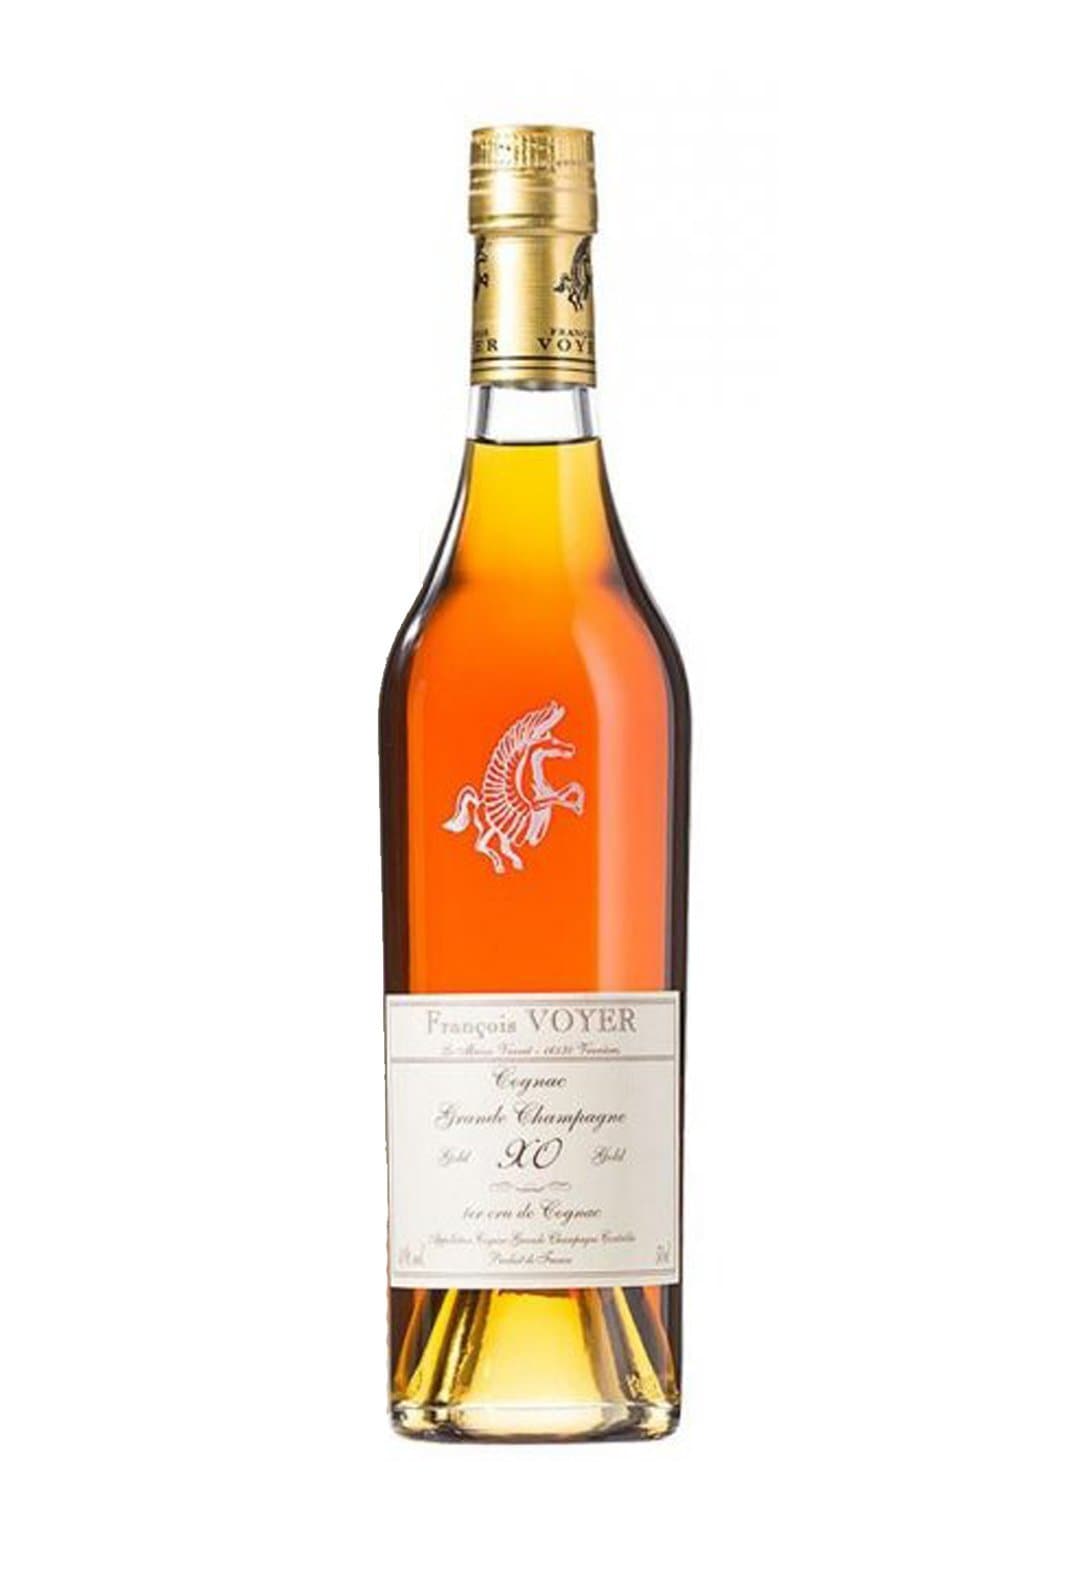 Francois Voyer XO Gold 20-30 years Grande Champagne Cognac 40% 500ml | Brandy | Shop online at Spirits of France